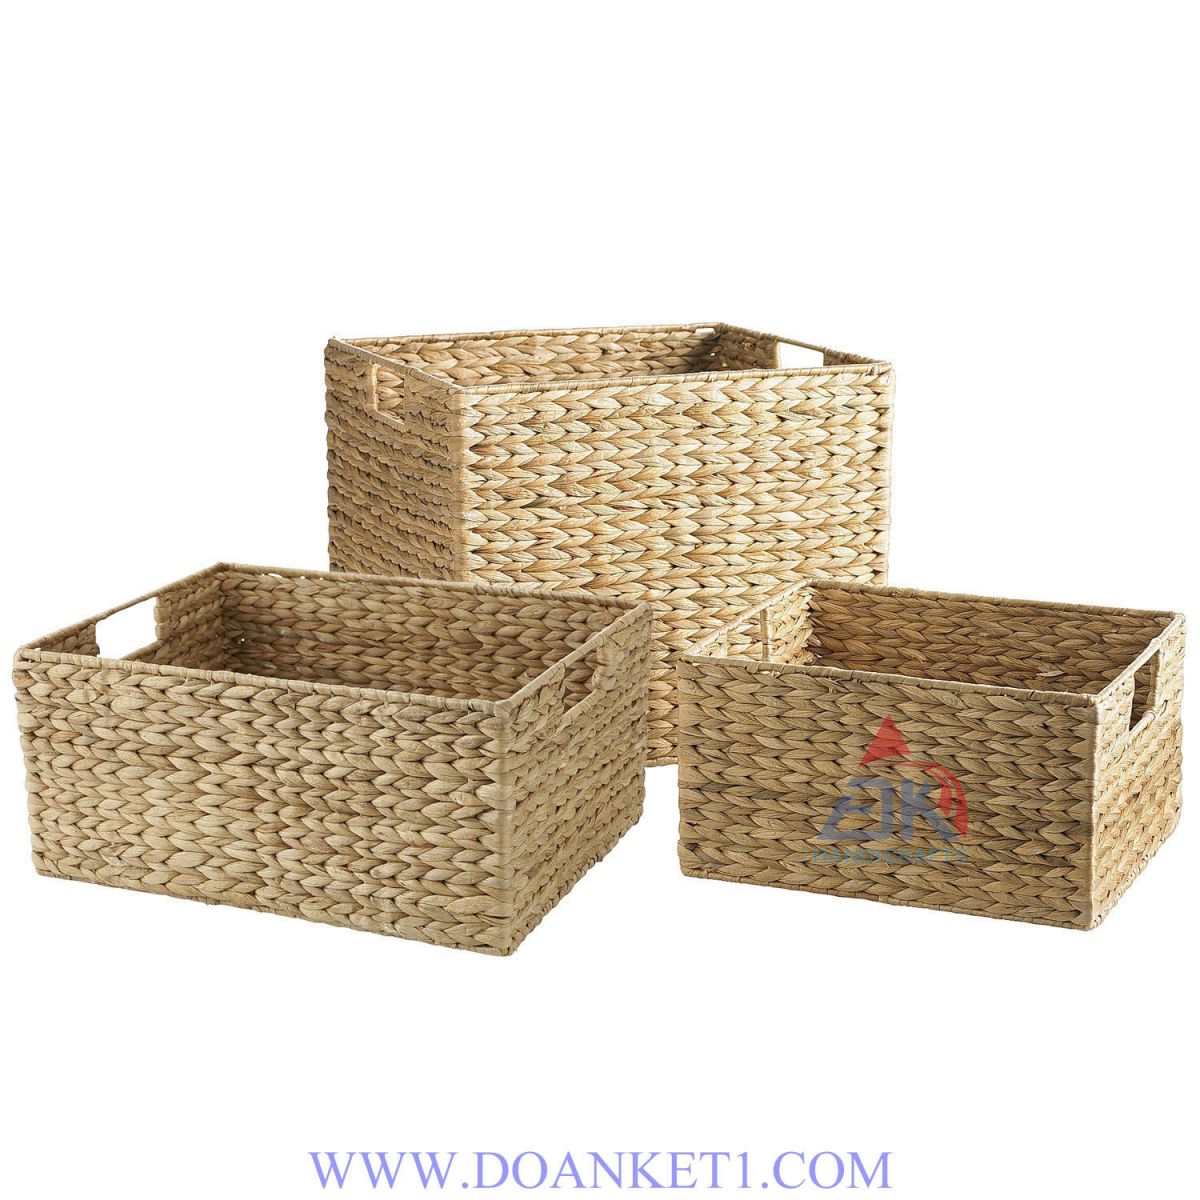 Water Hyacinth Basket S/3 # DK302